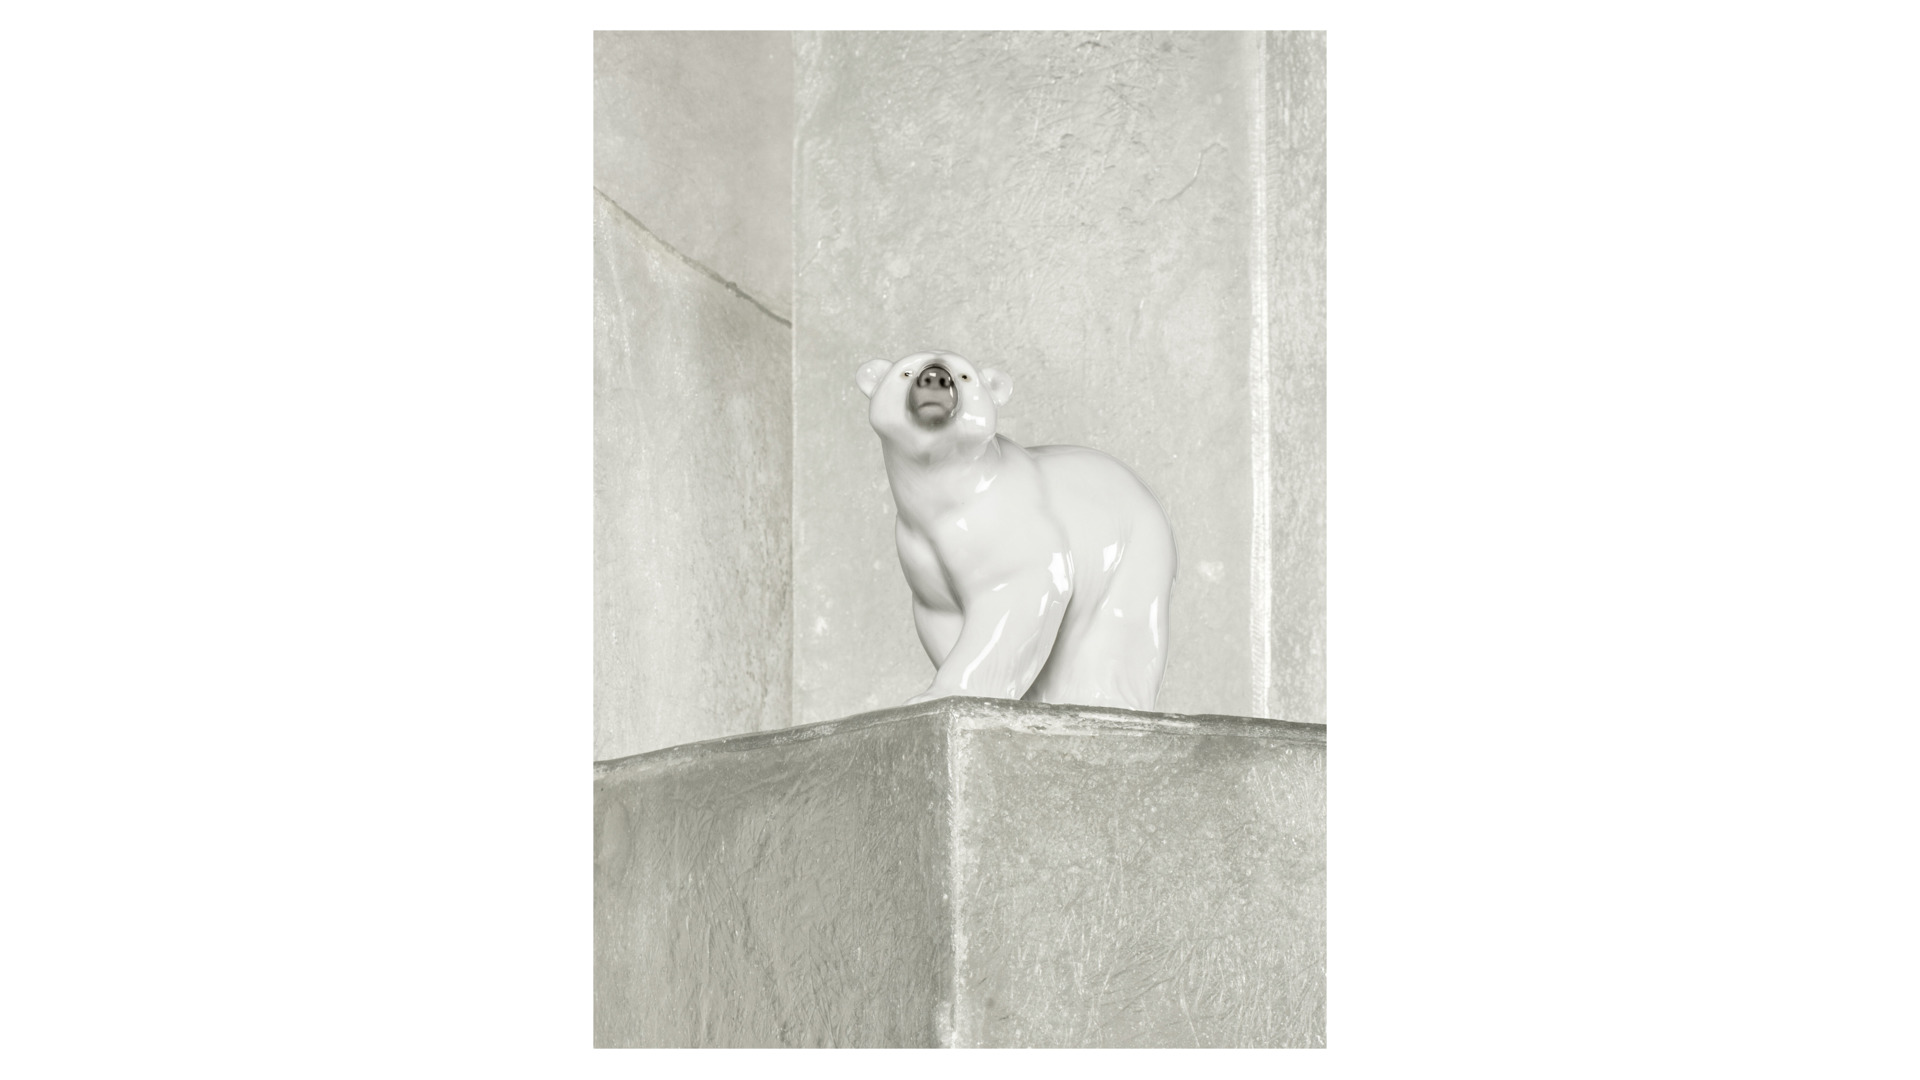 Фигурка Lladro Белый медведь I 13x10 см, фарфор